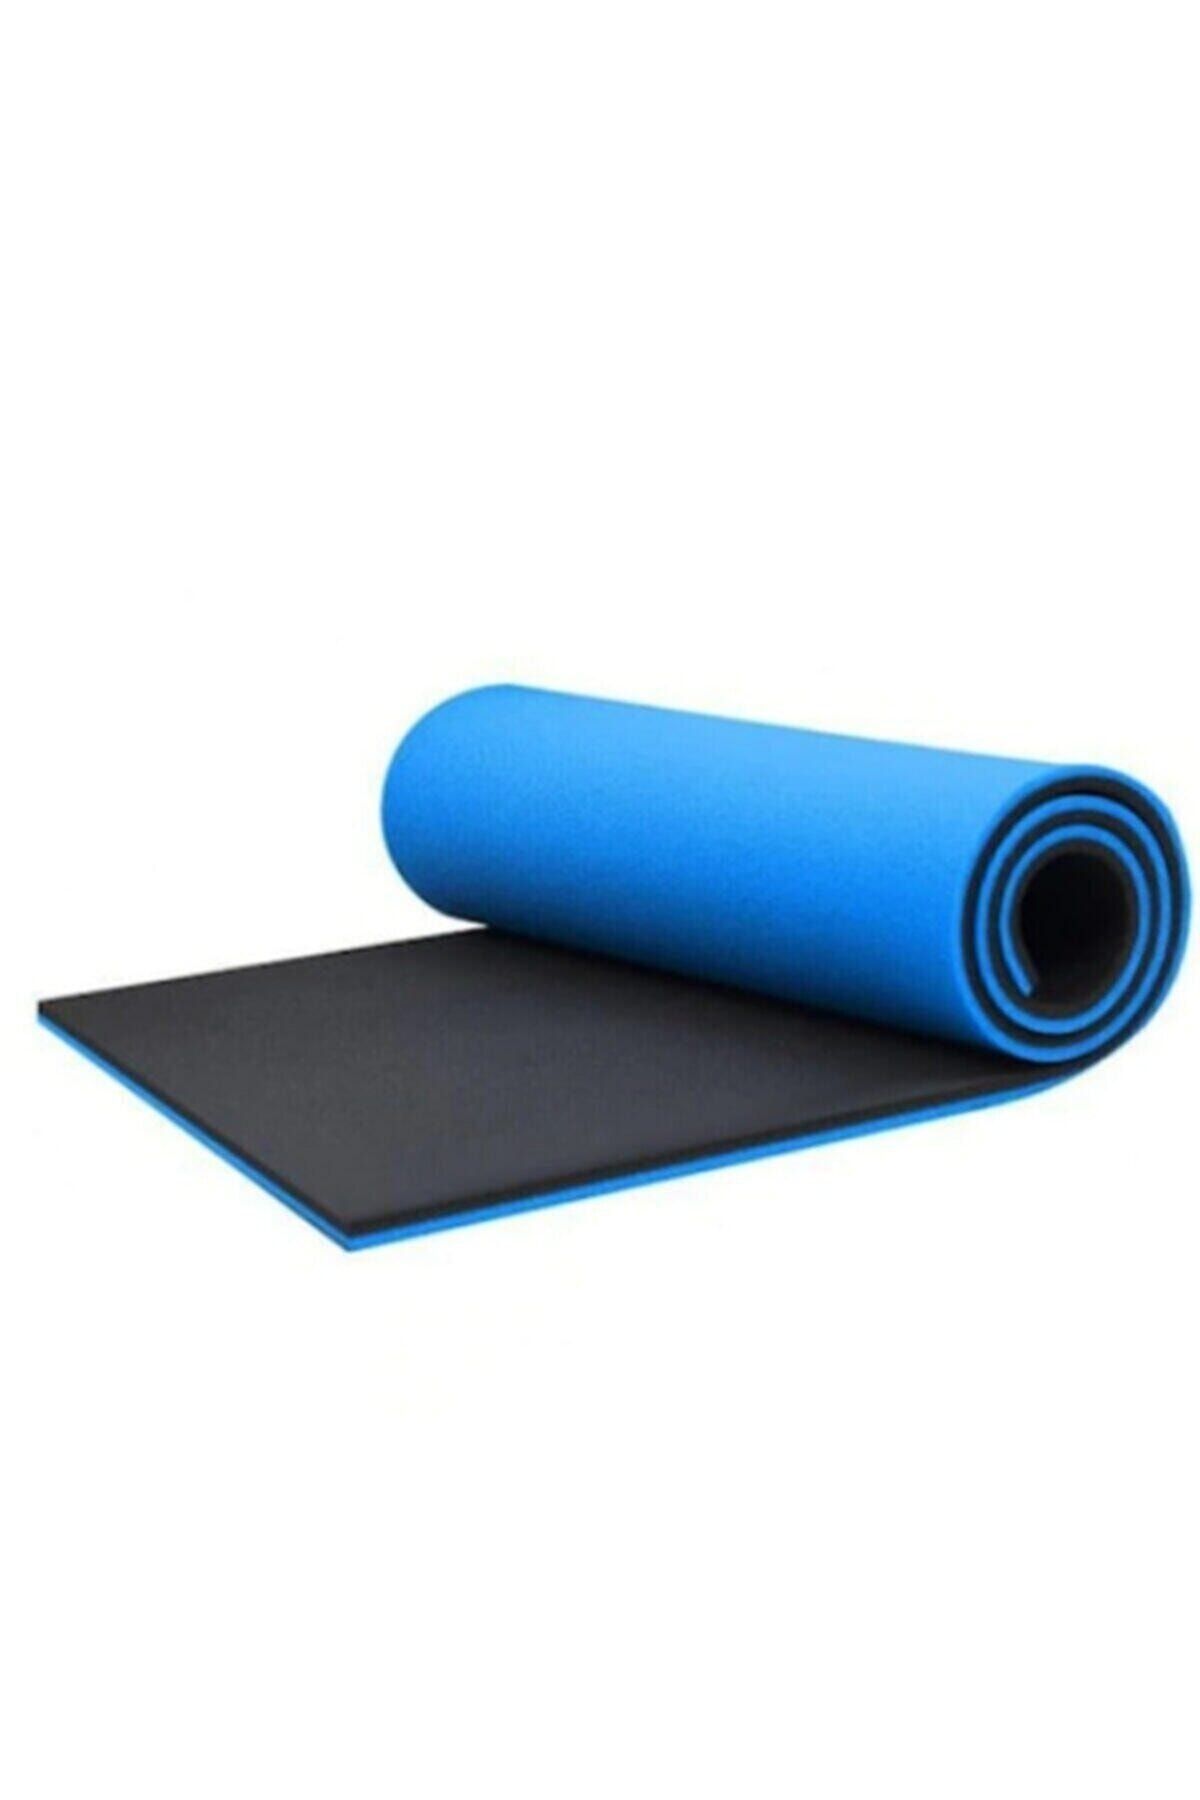 REDZEUS Çift Taraflı Mavi Siyah Pilates Minder Ve Mat Pilates Minderi Yoga Matı Uyku Matı